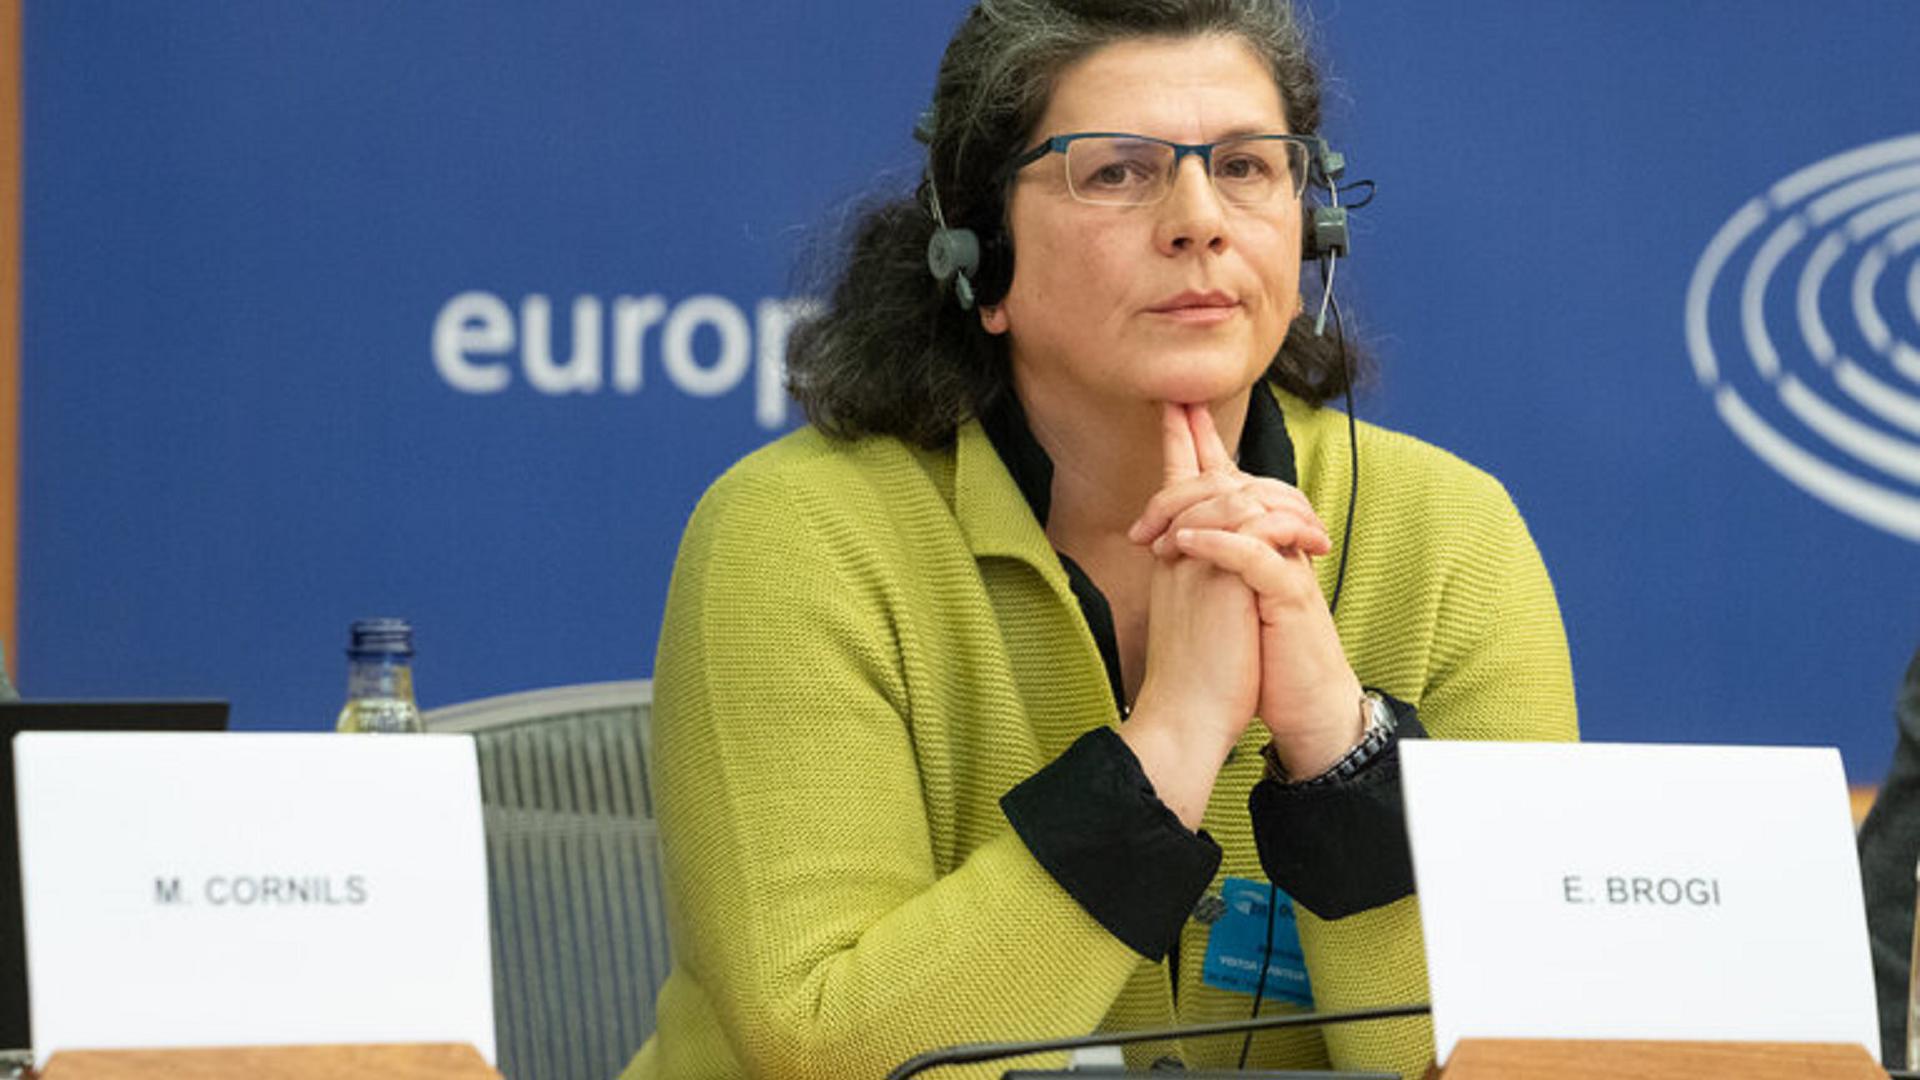 Elda Borgi at the European Parliament during a public hearing on the Media Freedom Act